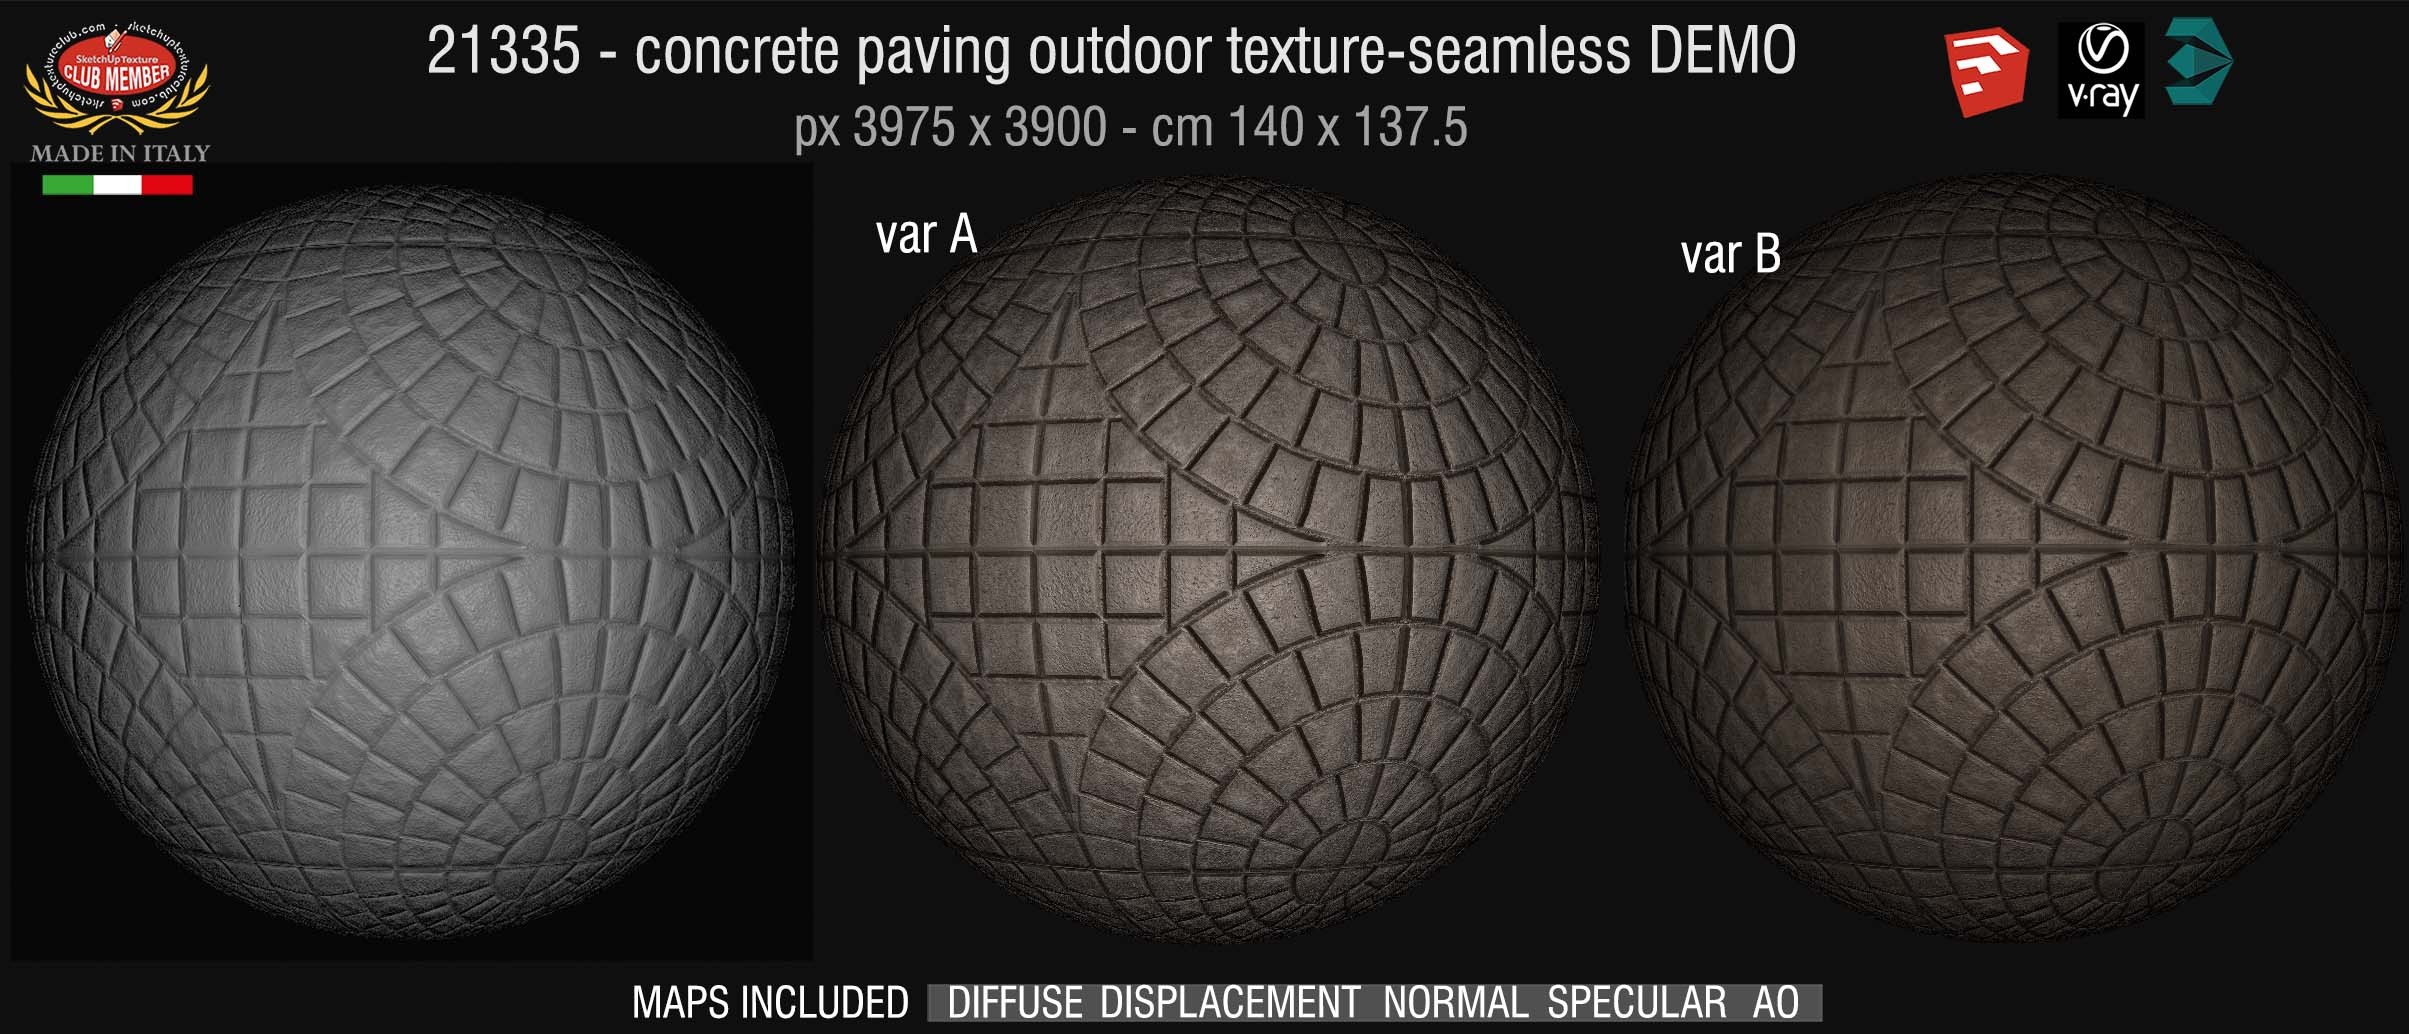 21335 HR concrete paving outdoor texture seamless + maps DEMO